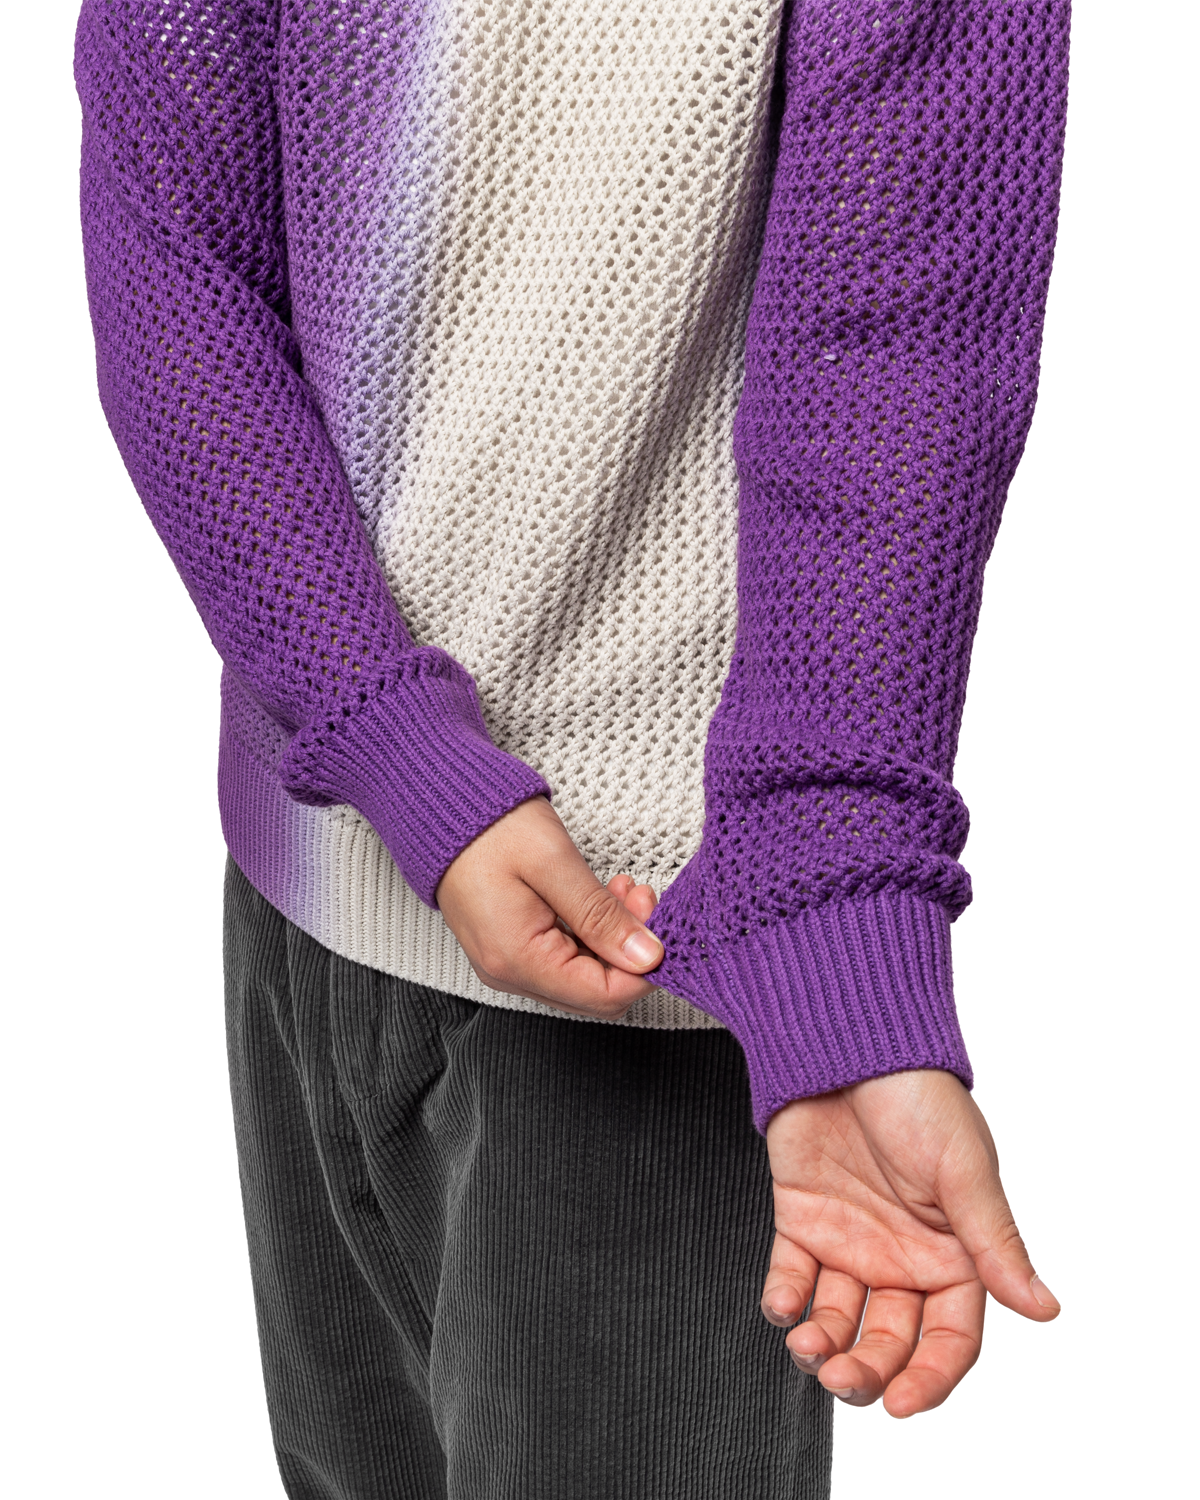 Dyed Loose Gauge Sweater Purple